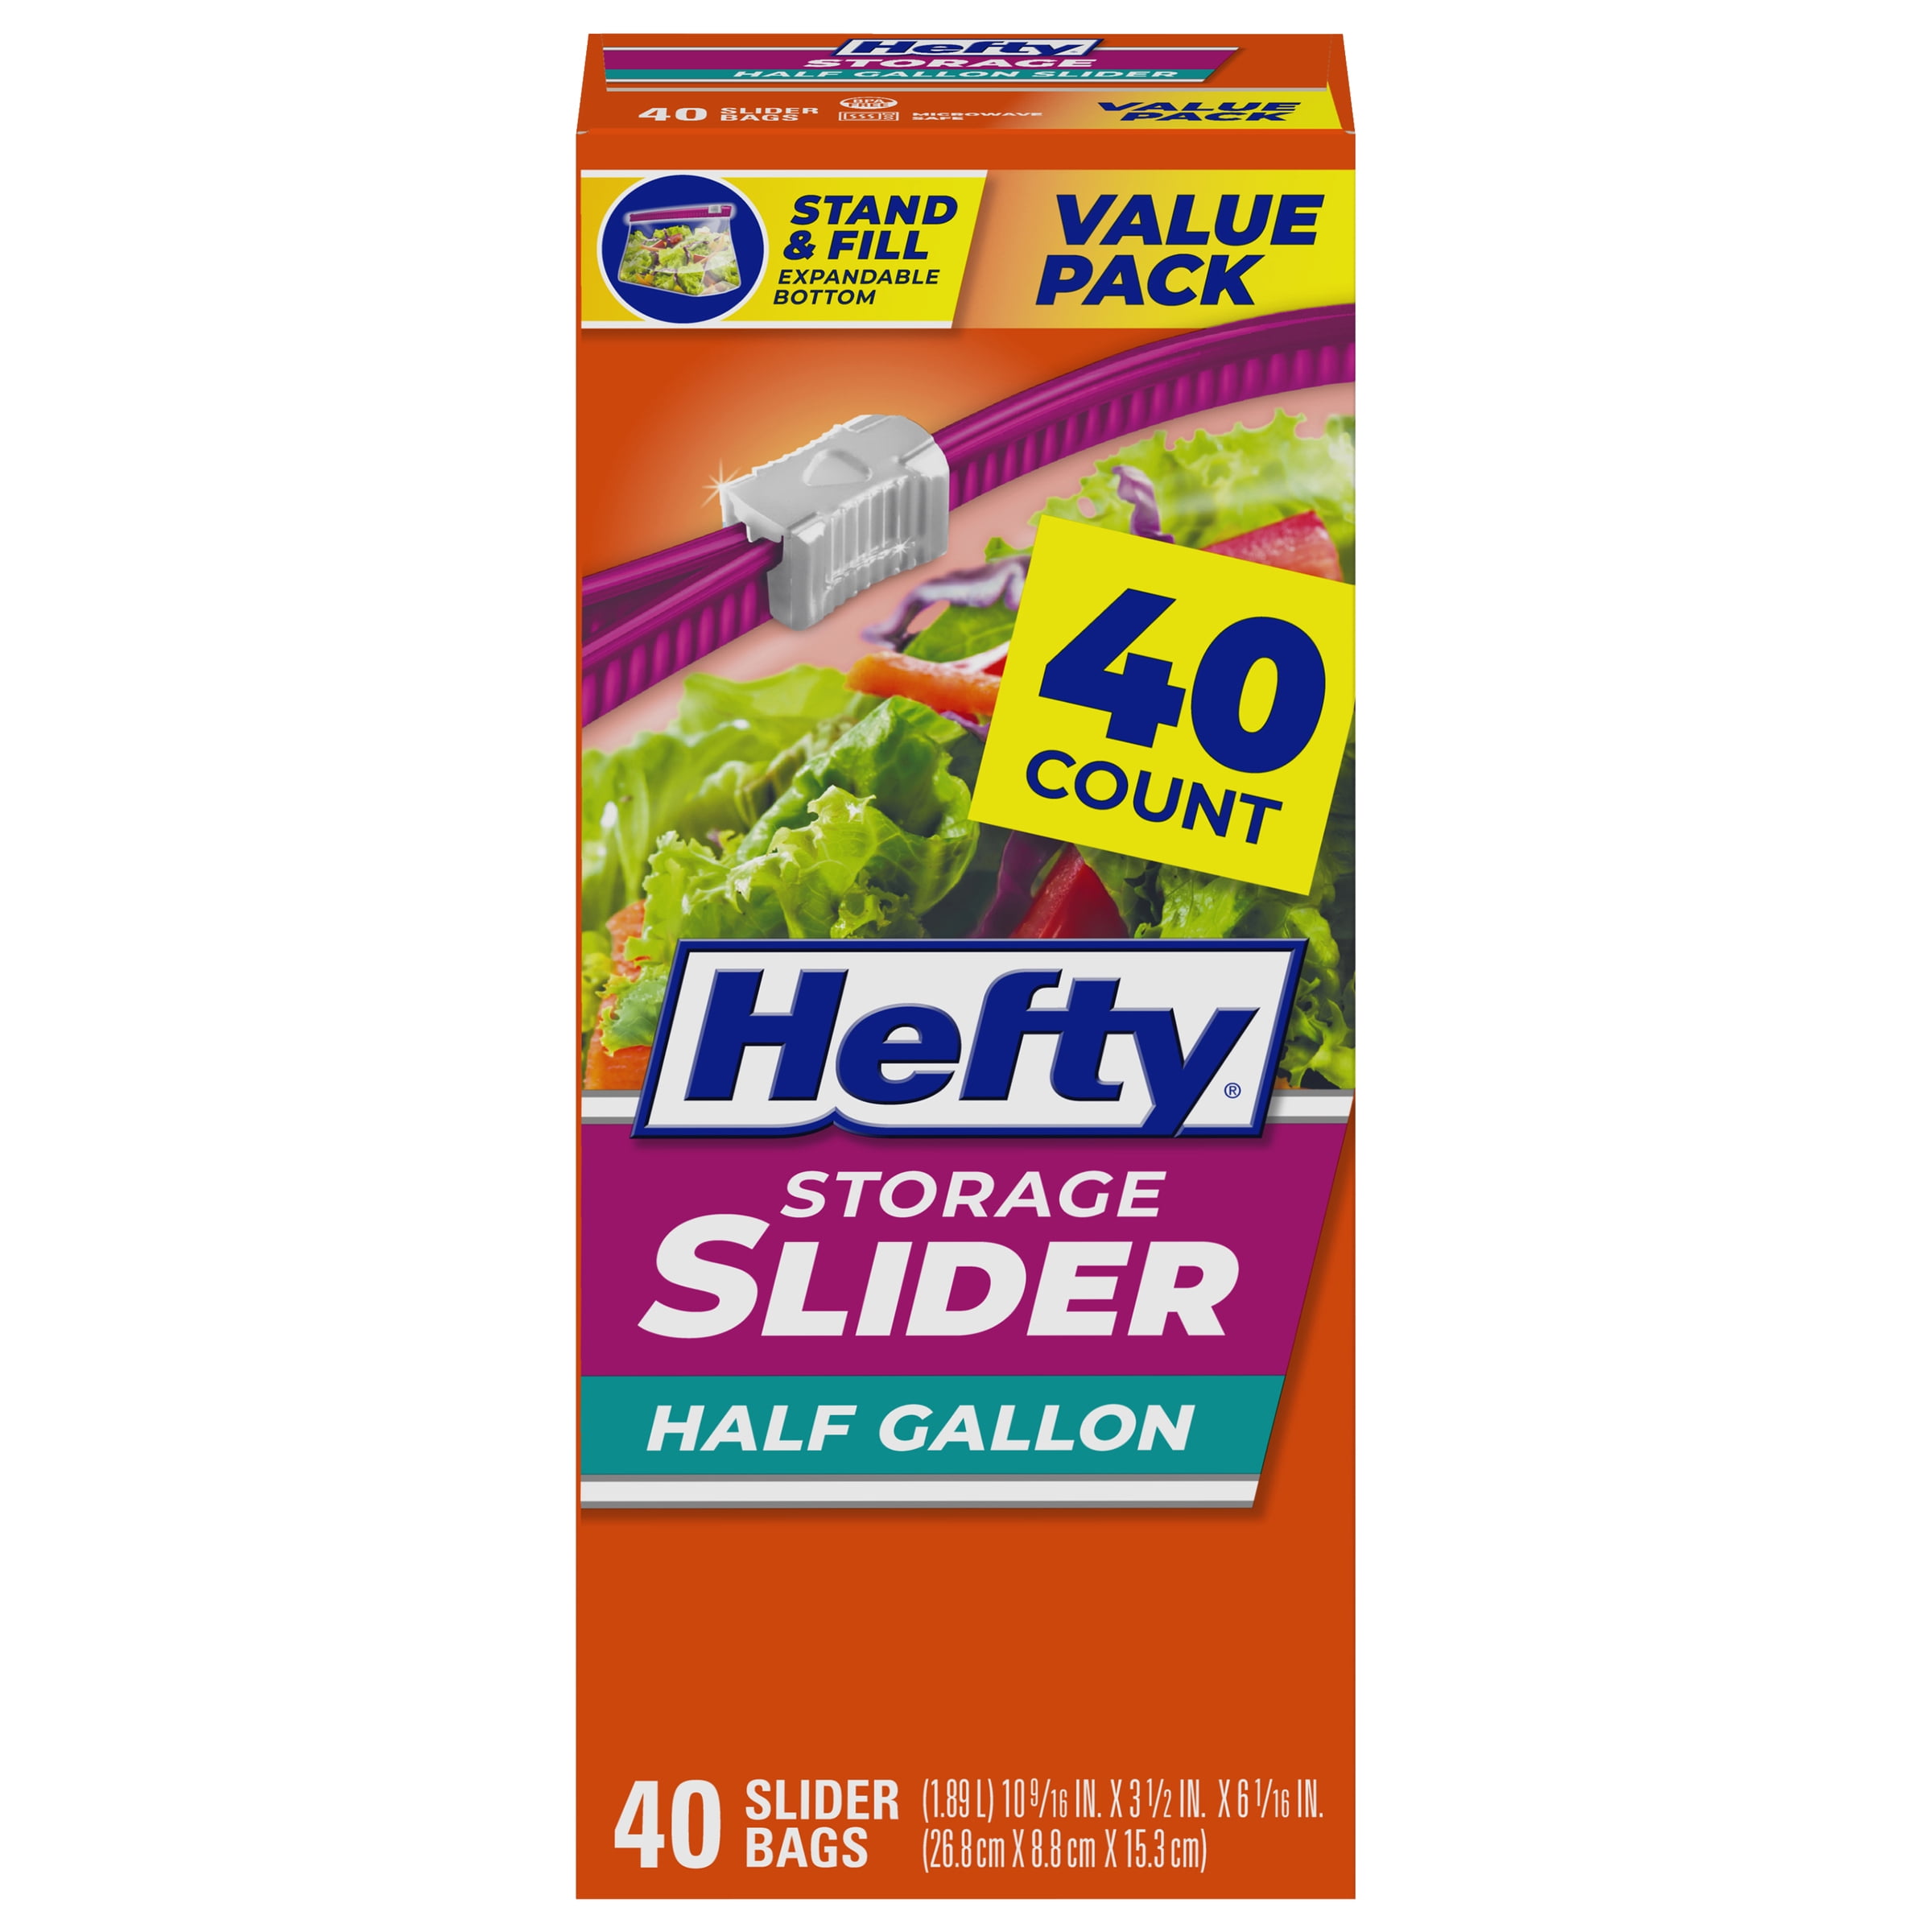 Hefty Half Gallon Storage Slider Bags Value Pack, 32 count